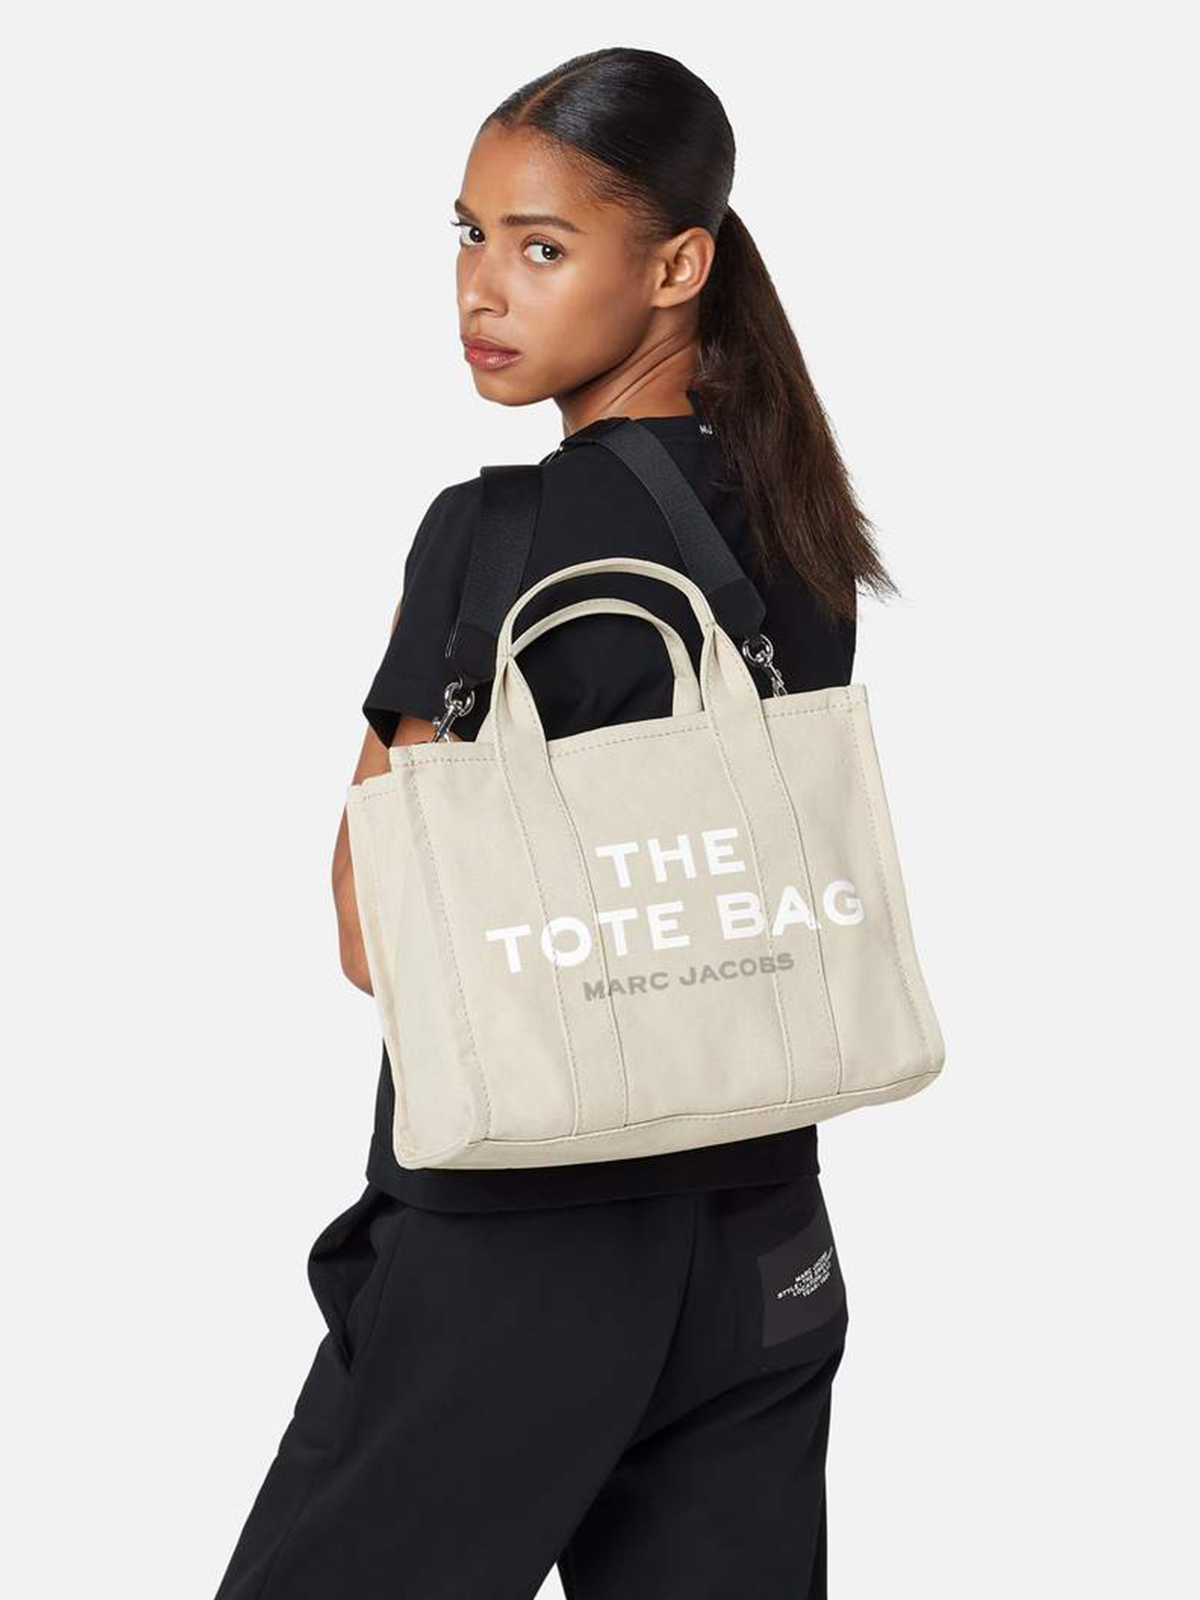 O'TAY Tote Bag